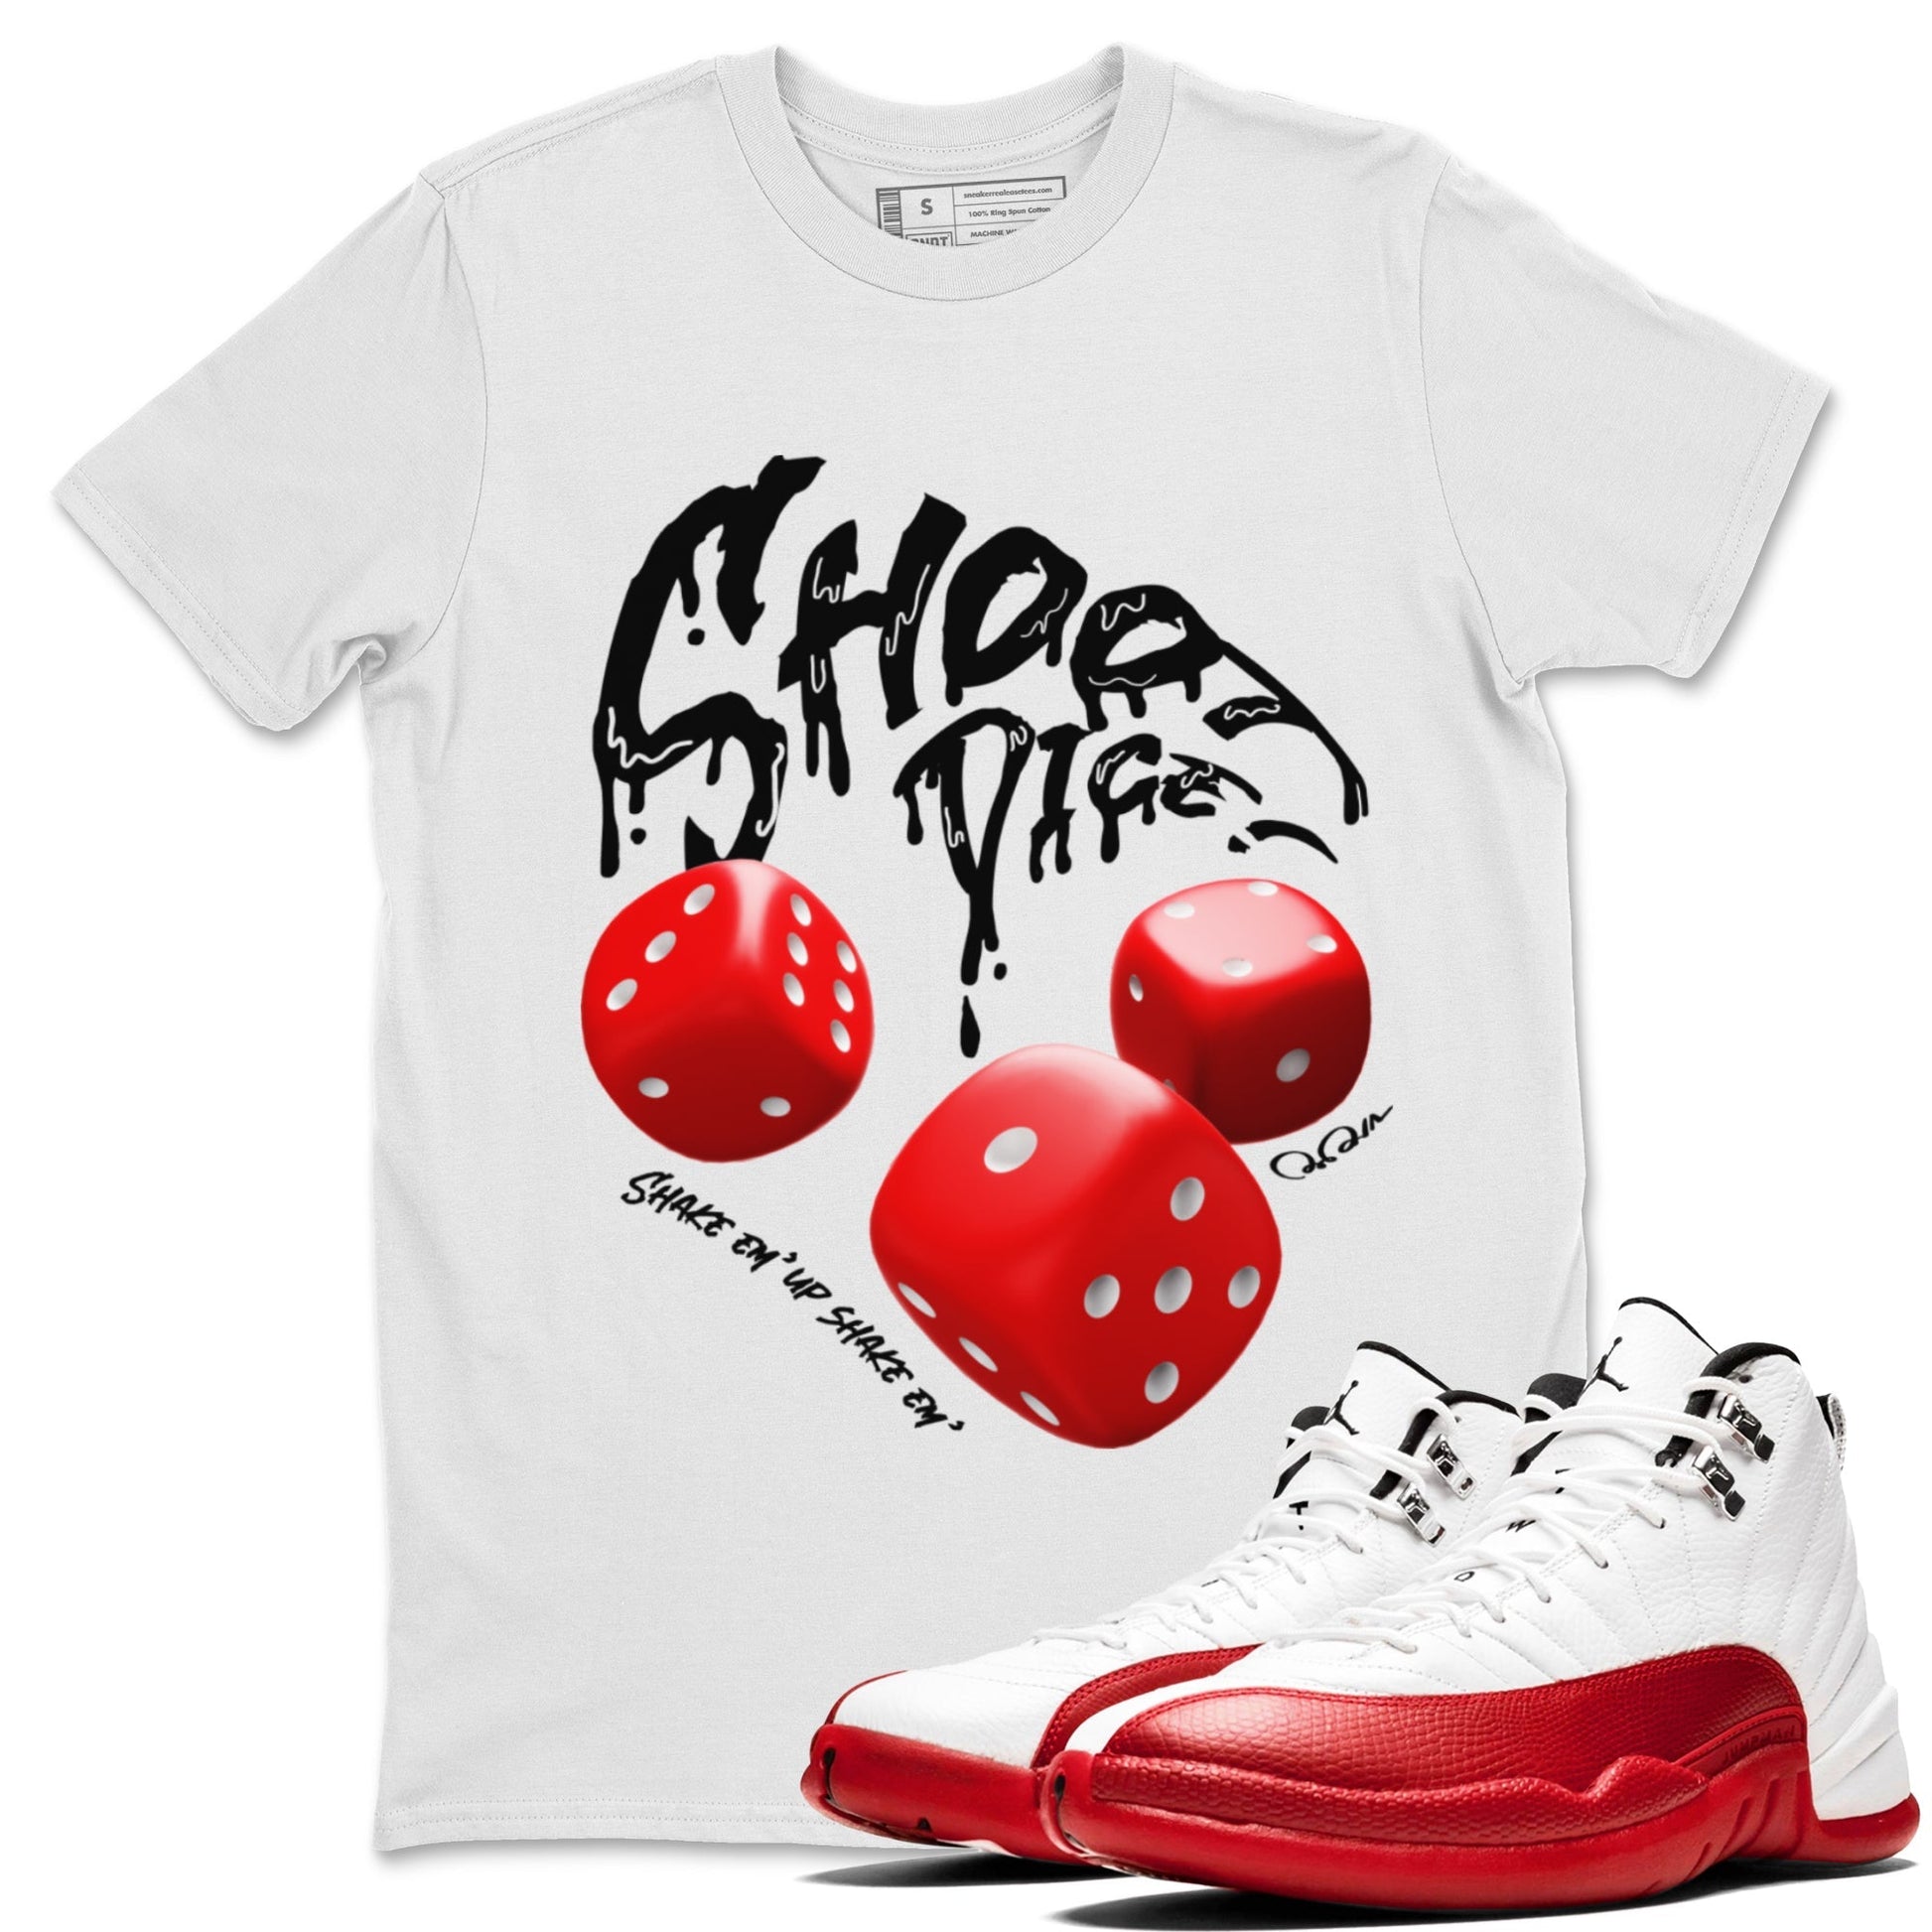 Air Jordan 12 Cherry Sneaker Match Tees Shoot Dice Streetwear Sneaker Shirt AJ12 Cherry Sneaker Release Tees Unisex Shirts White 1